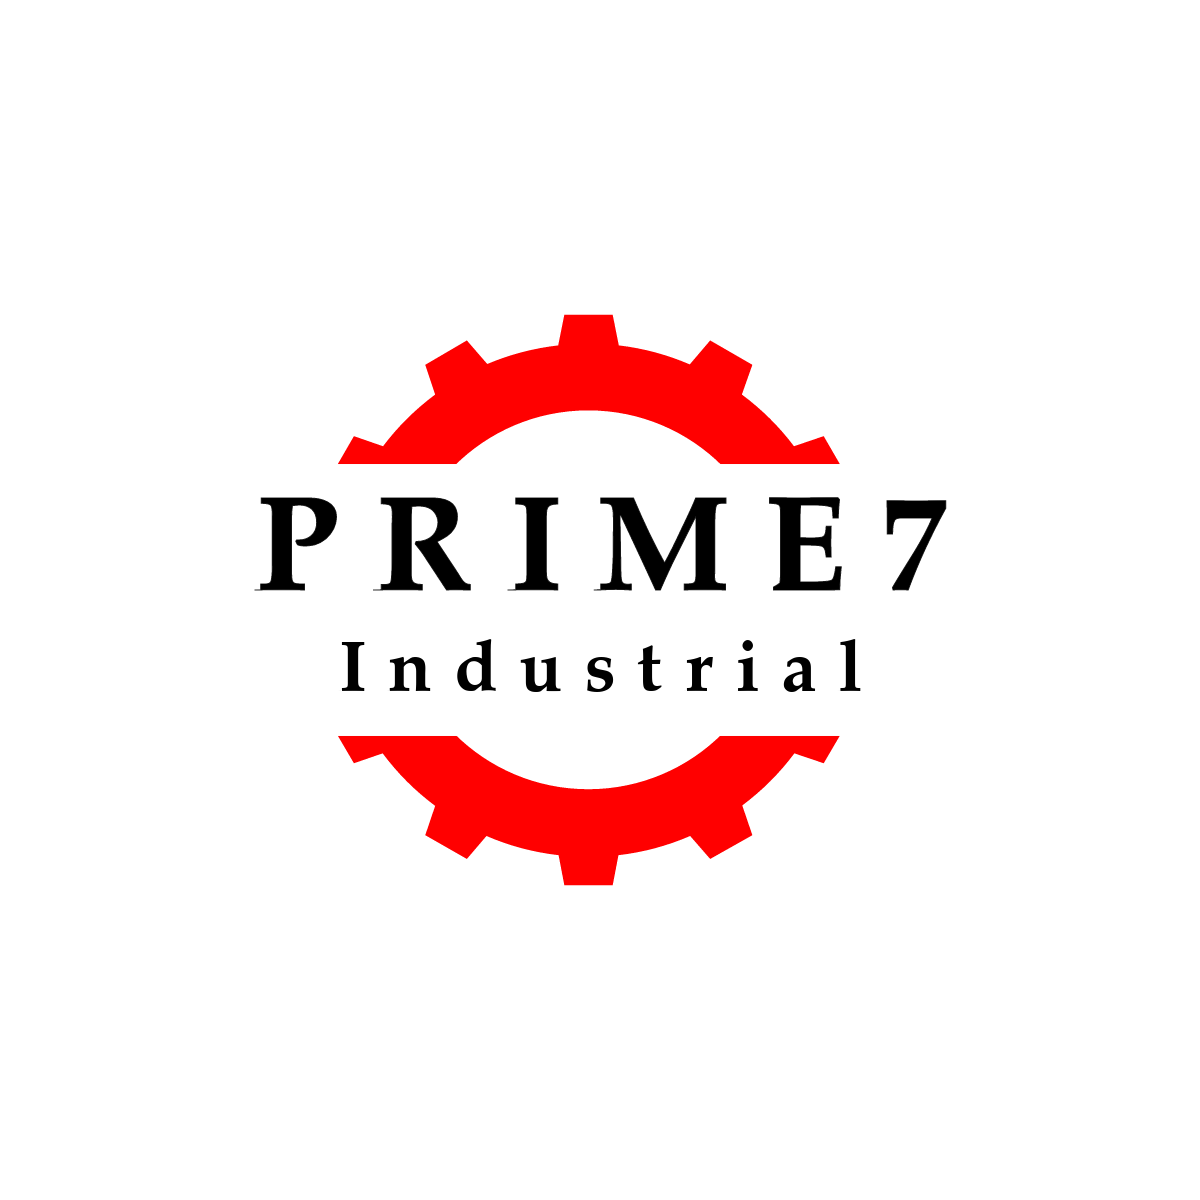 Prime7 Industrial